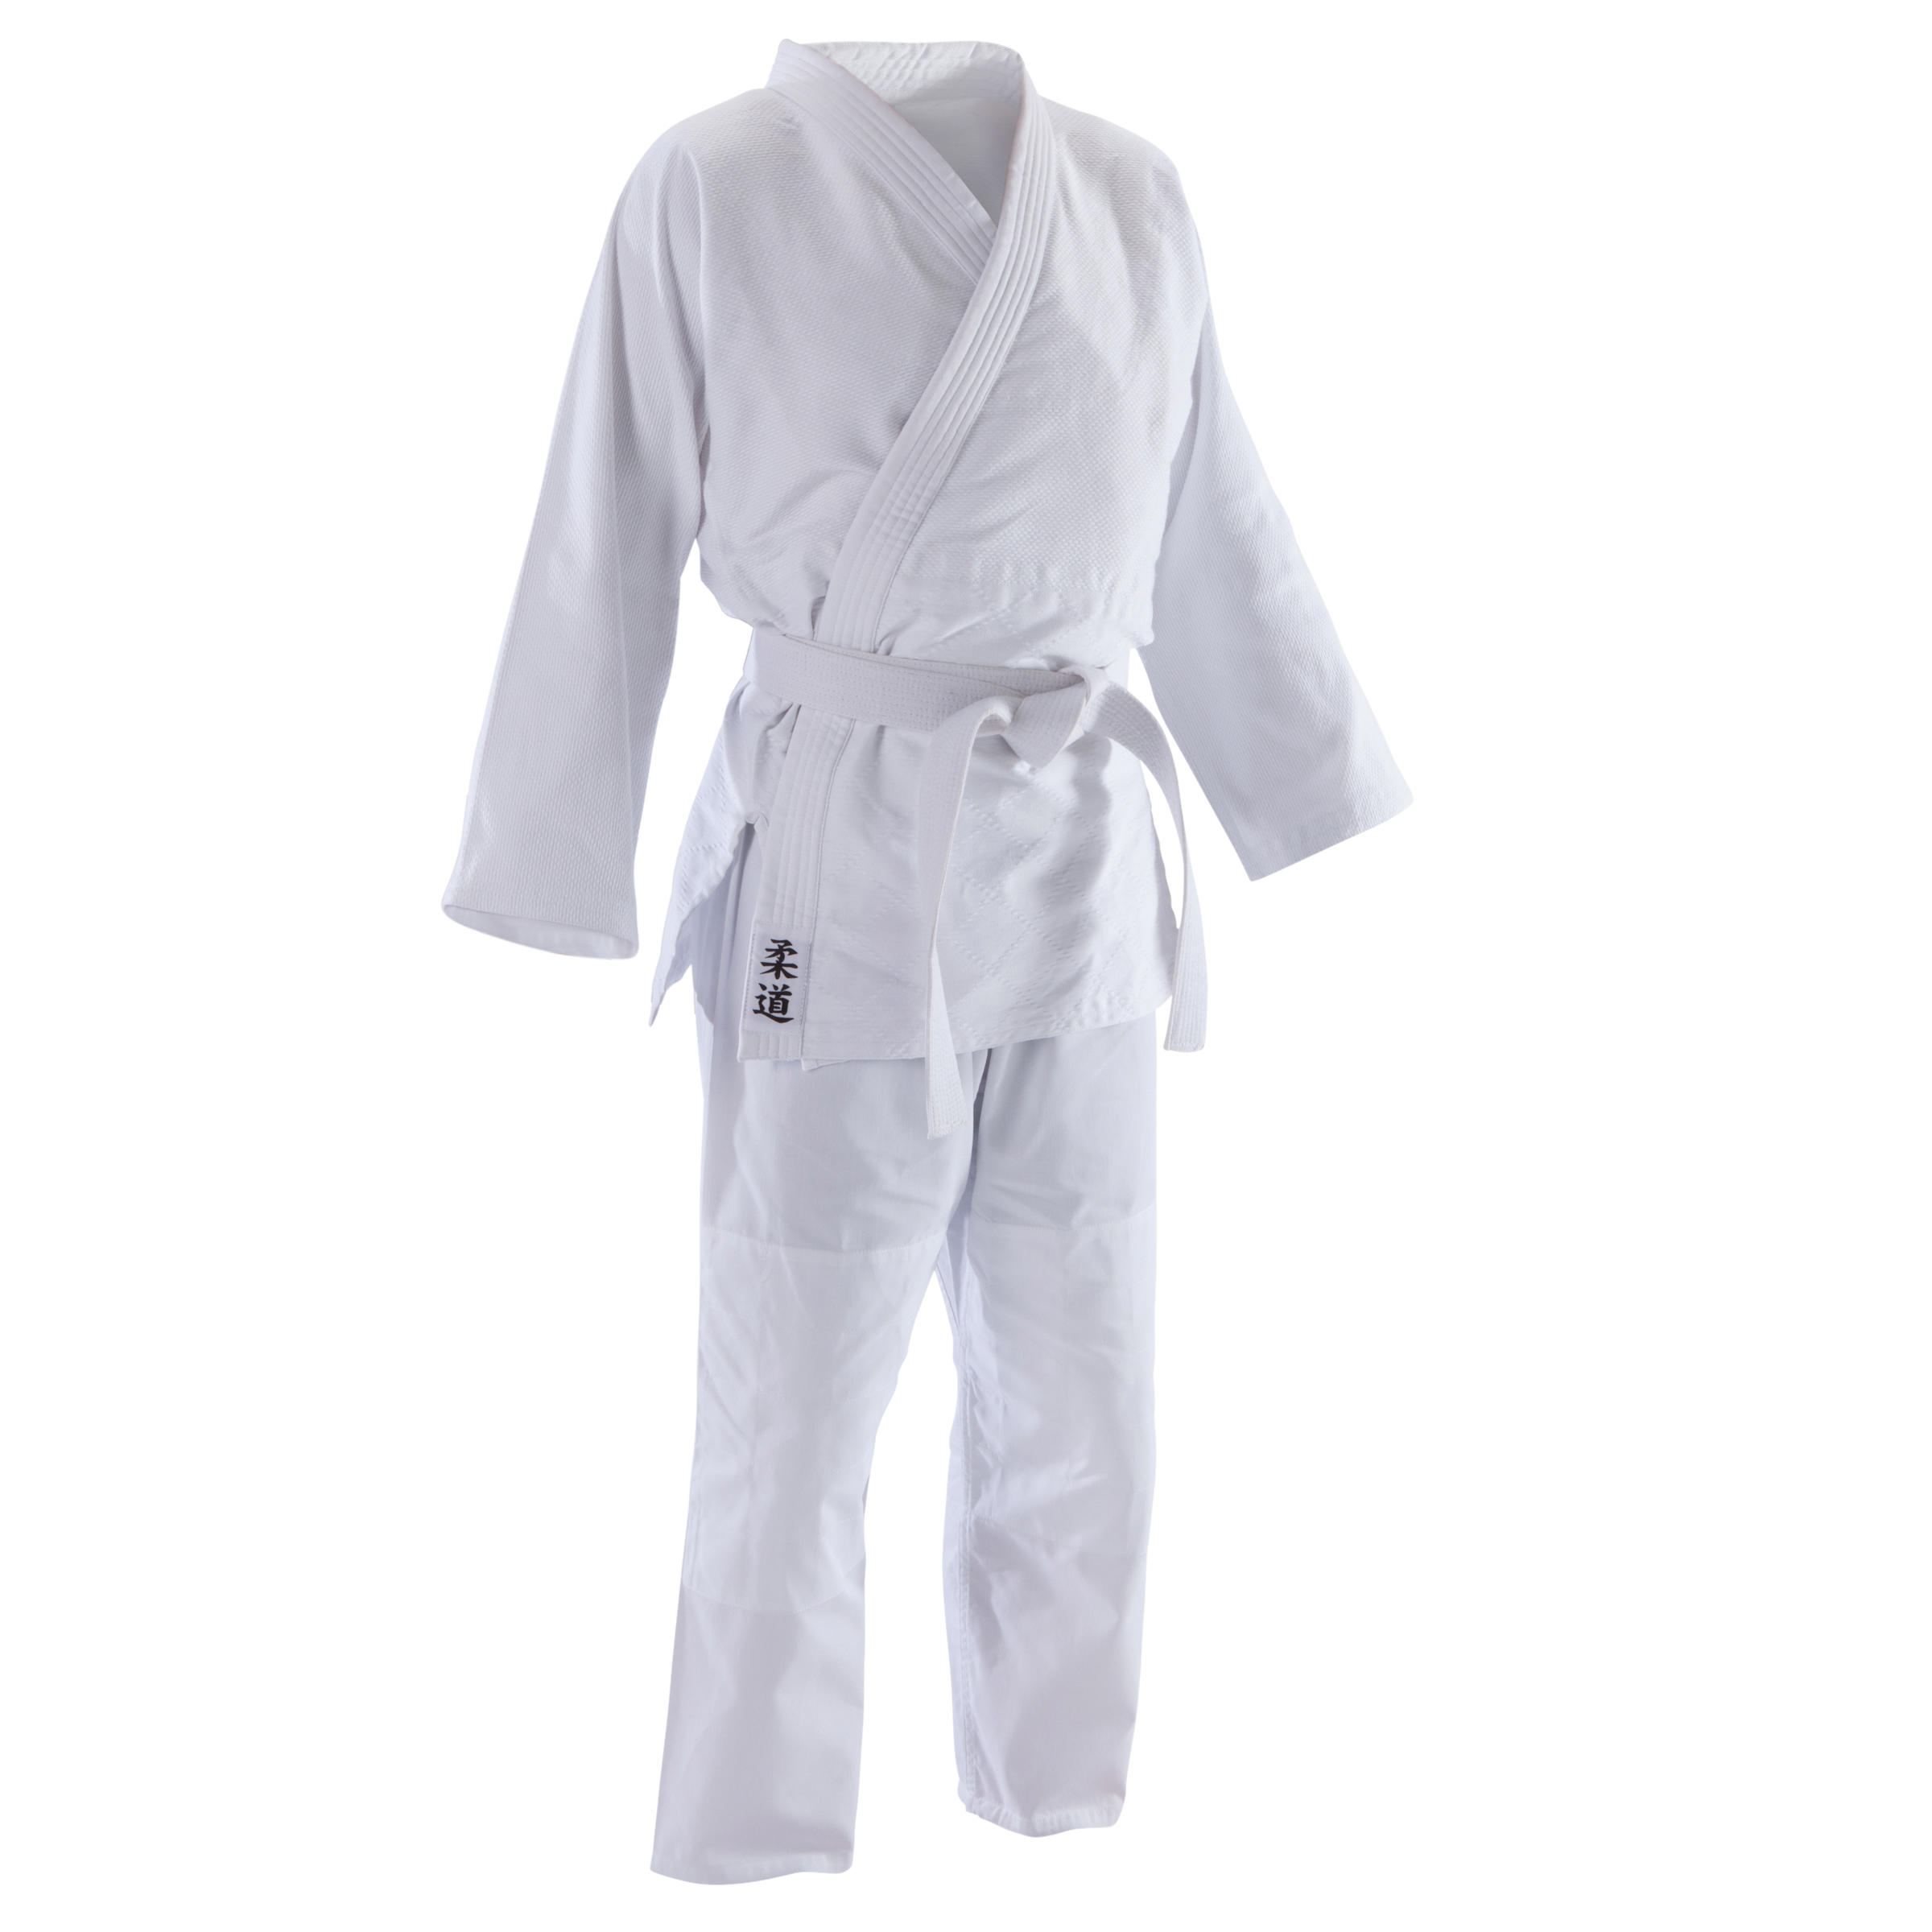 Judogis, Kimonos de Judo online | Decathlon